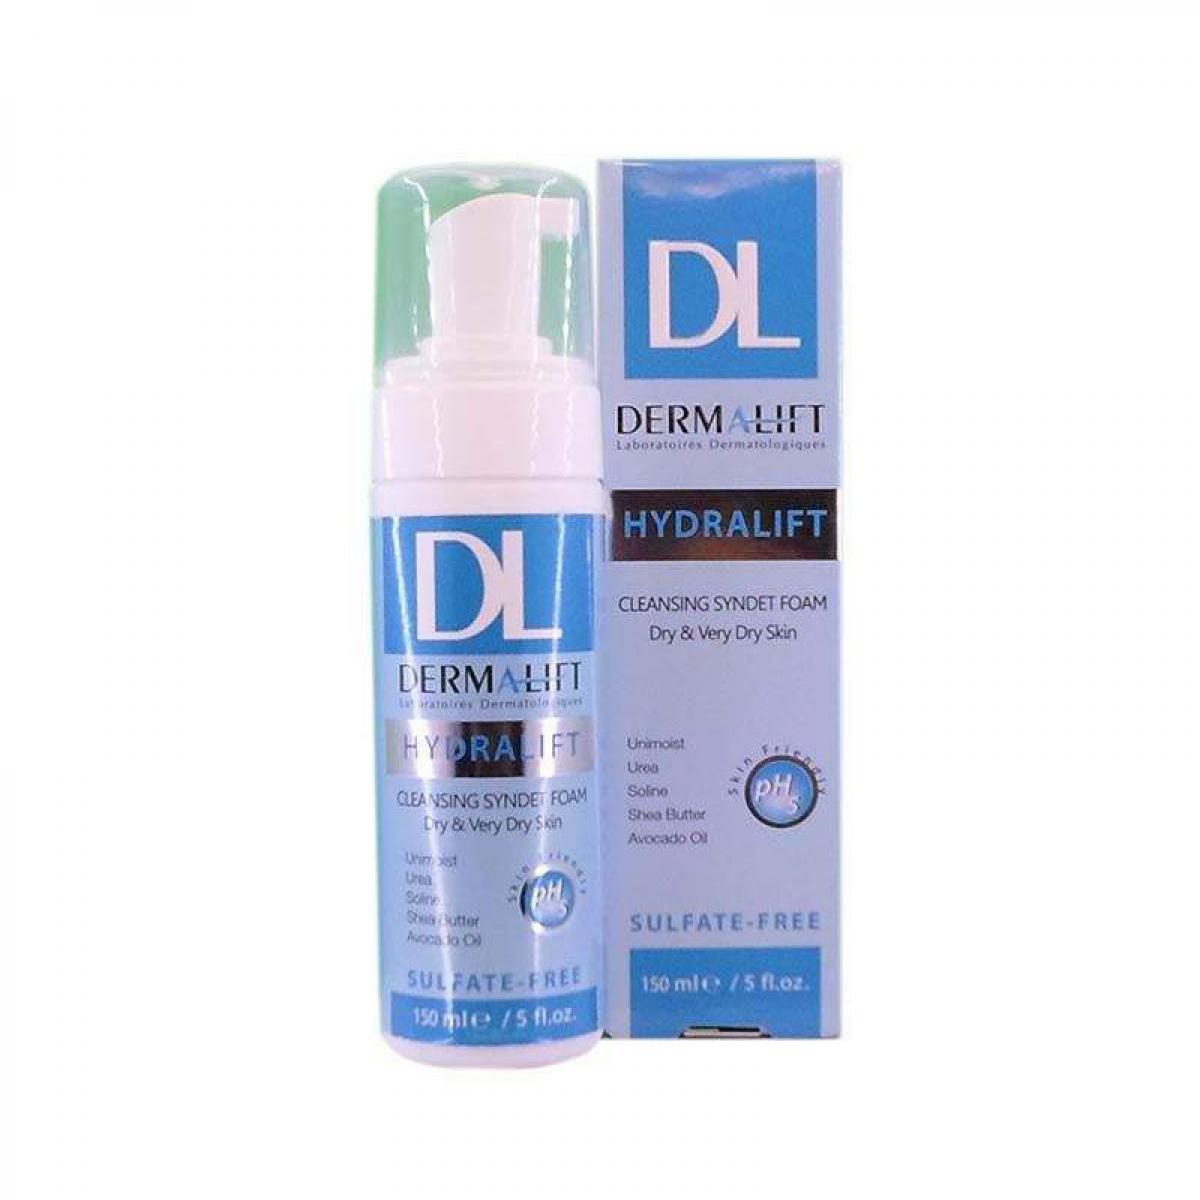 فوم شستشوی صورت پوست خشک هیدرالیفت - Dermalift Hydralift Dry Skin Cleansing Syndet Foam